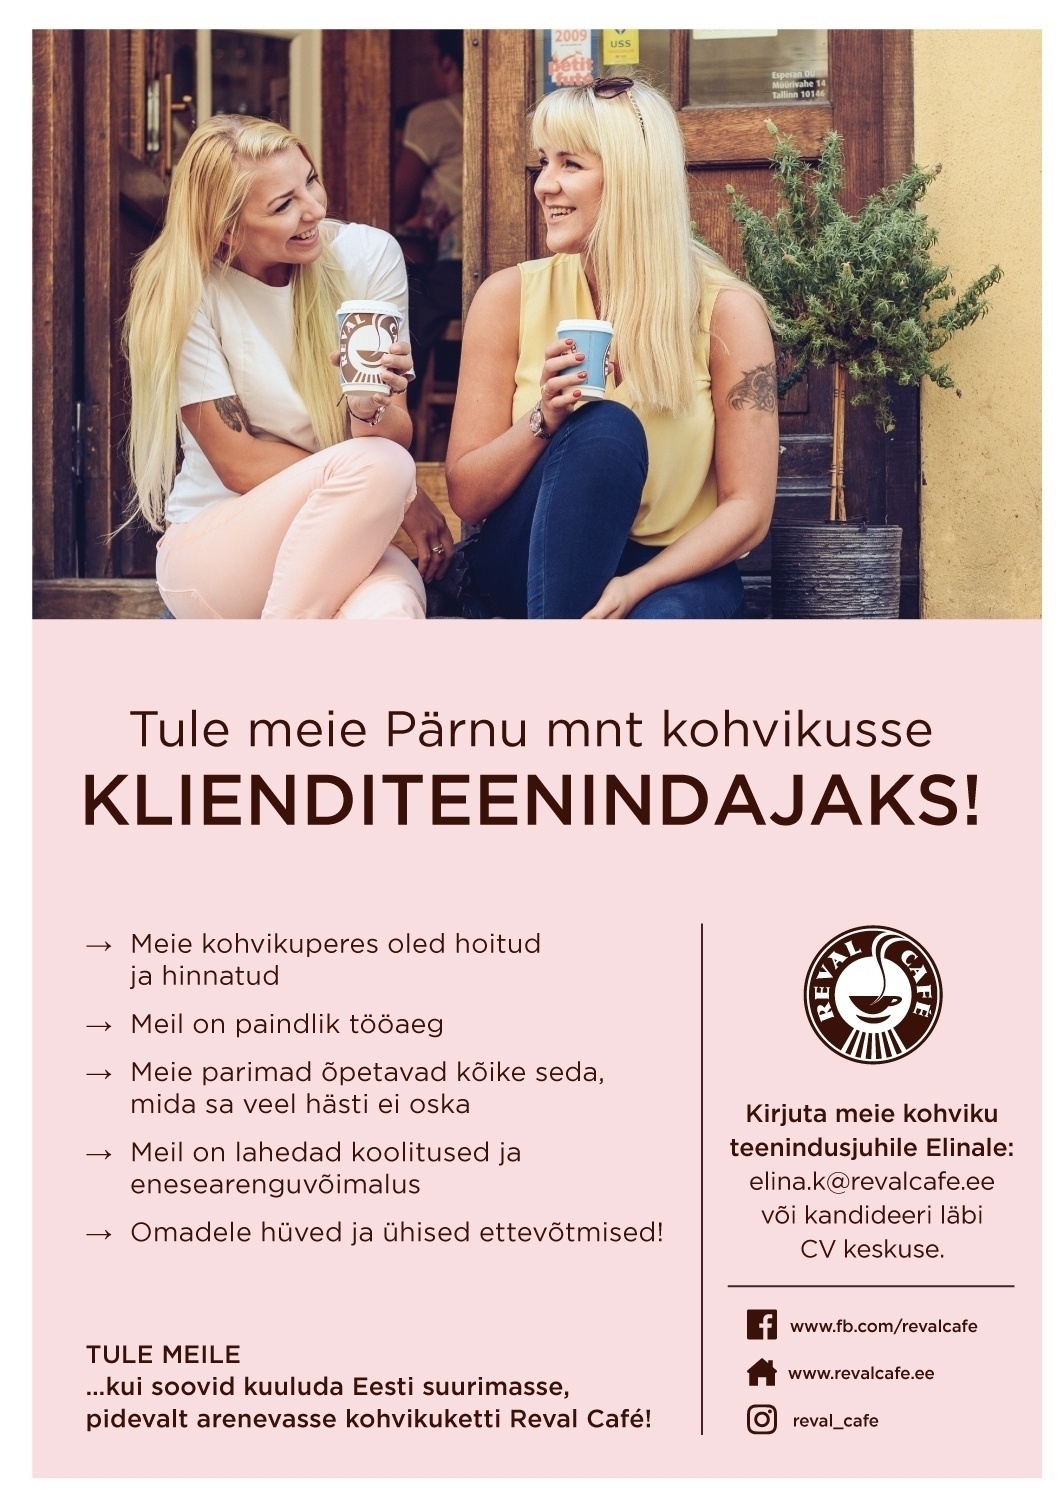 Reval Café Klienditeenindaja Reval Café Pärnu mnt. kohvikusse